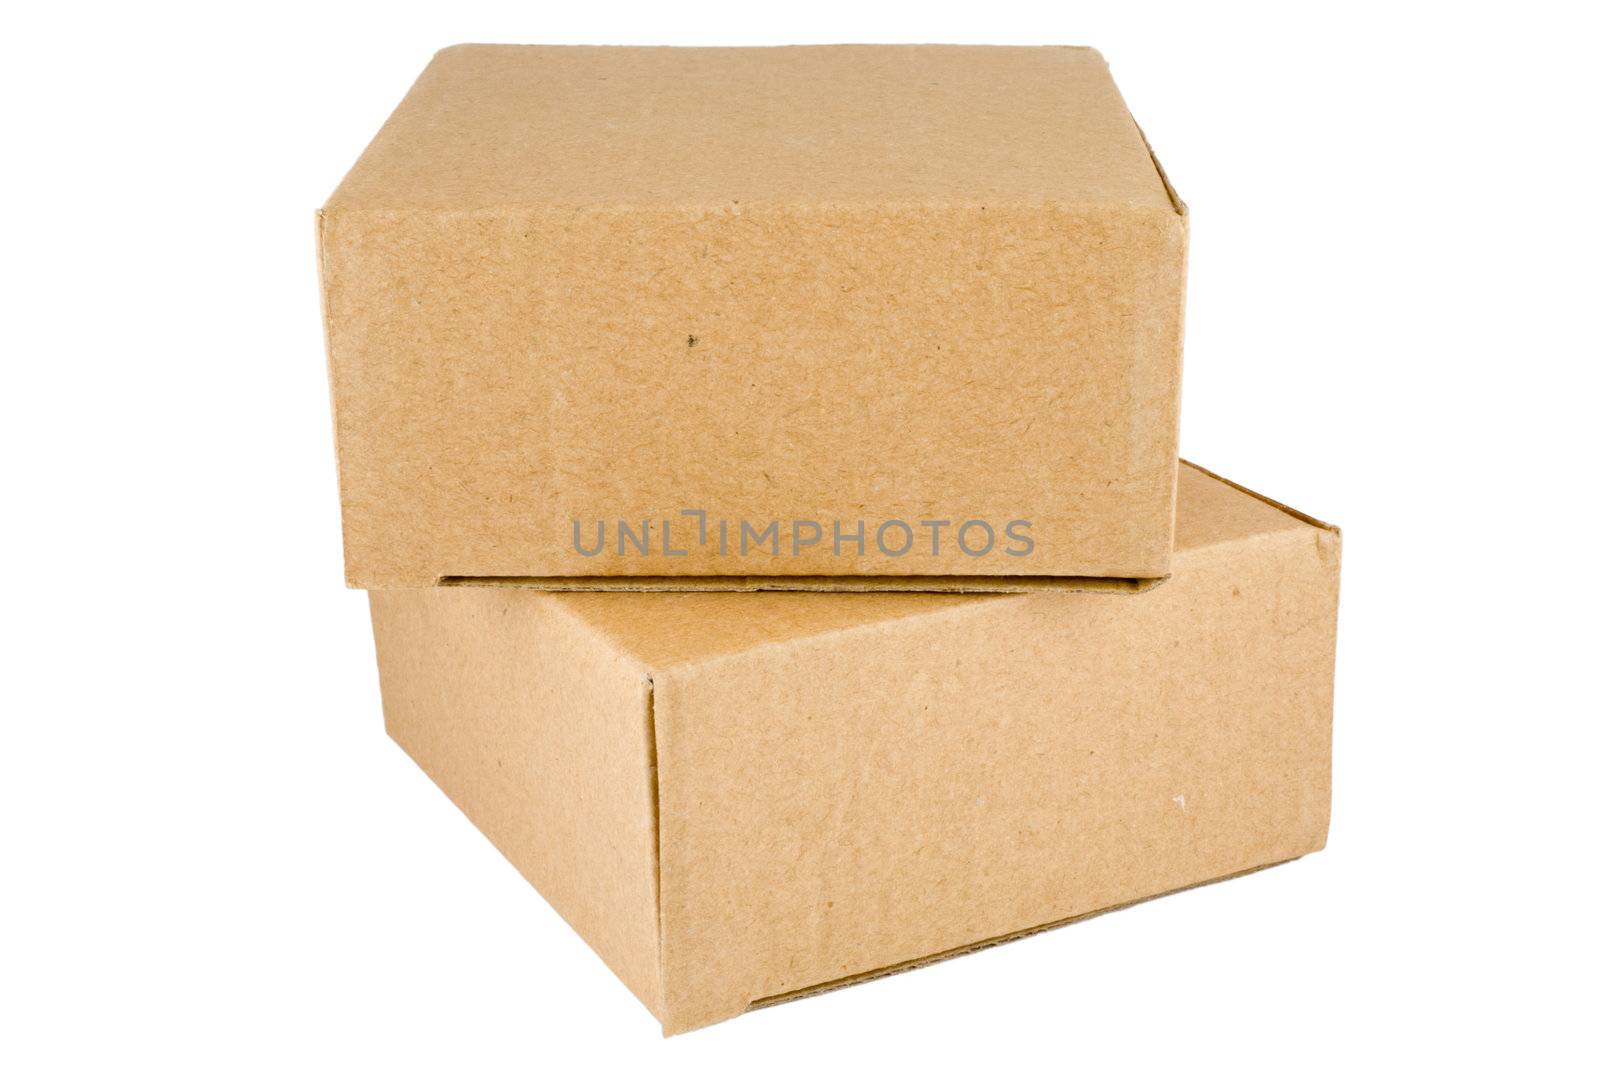 Stacked Cardboard Box by devulderj